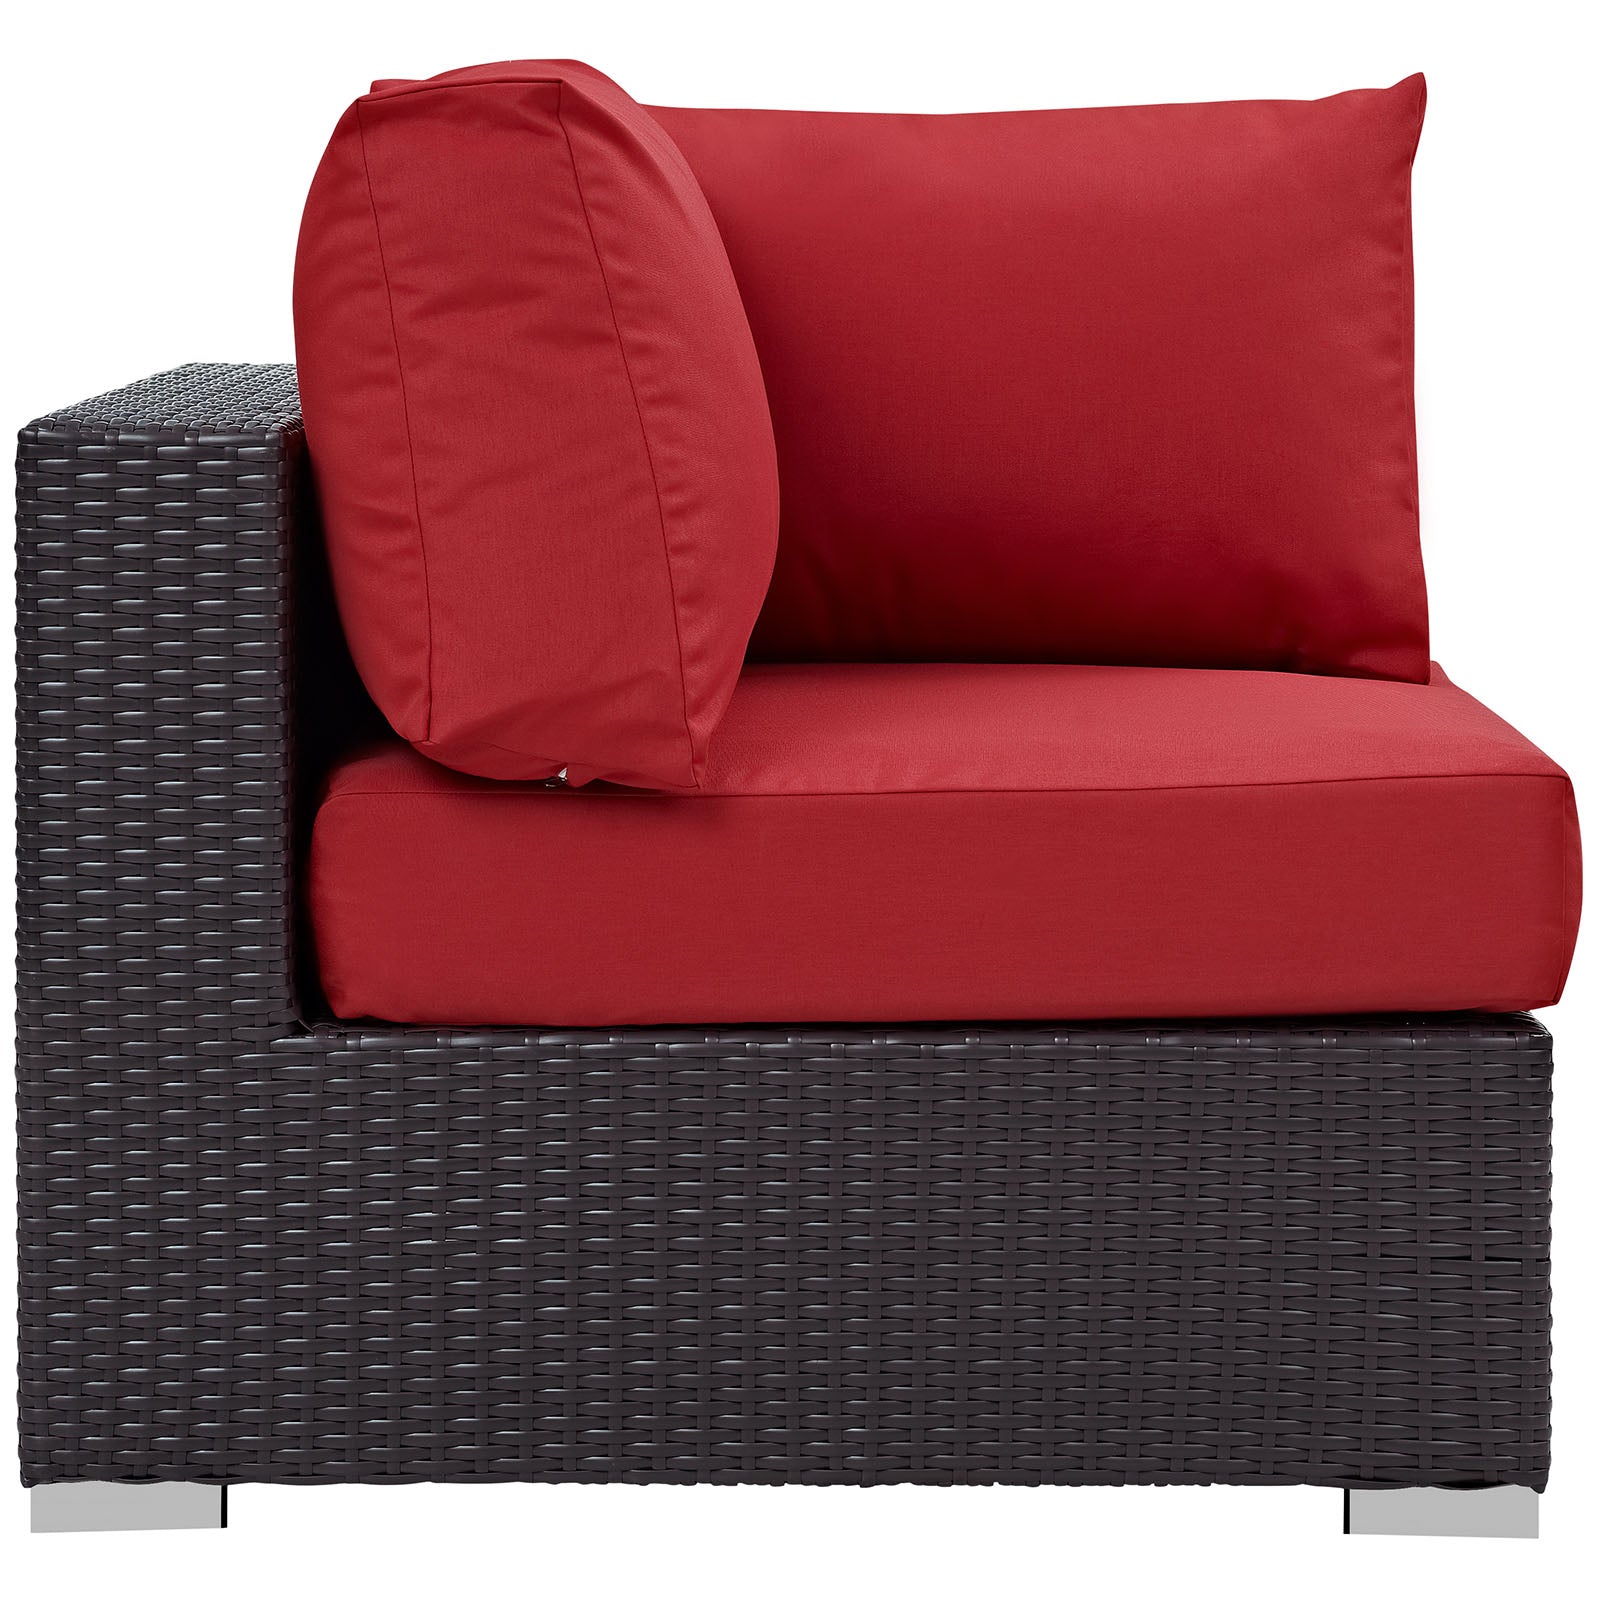 Modway Outdoor Chairs - Convene Outdoor Patio Corner Espresso Red